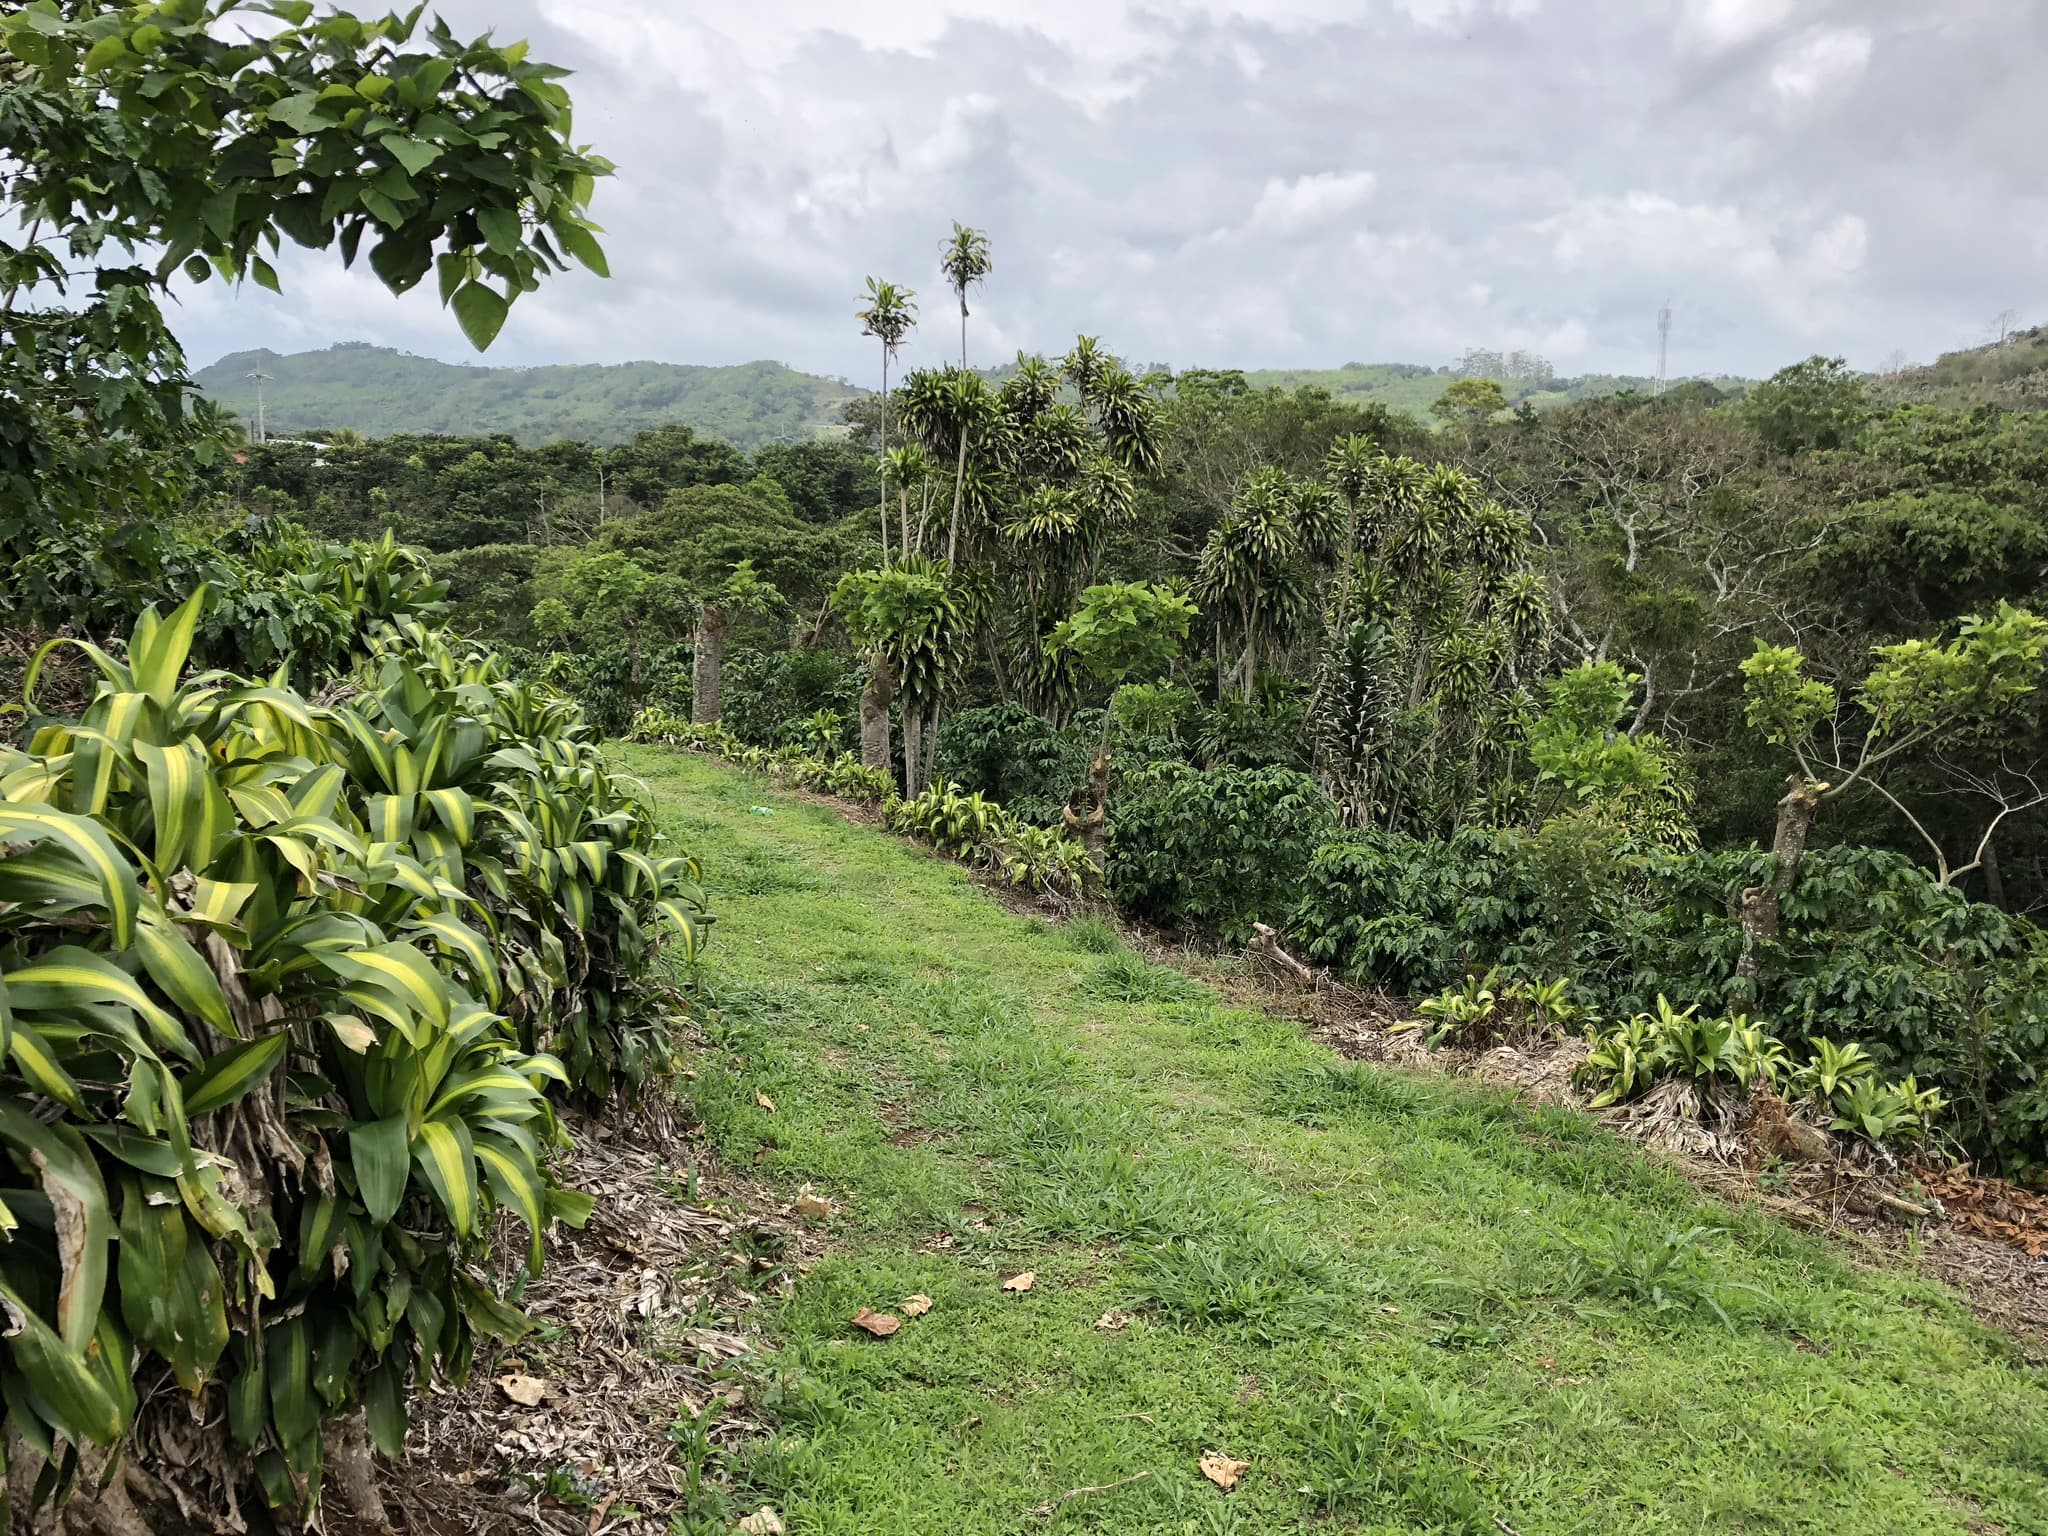 3.5 million dollar coffee farm, investors dream property.